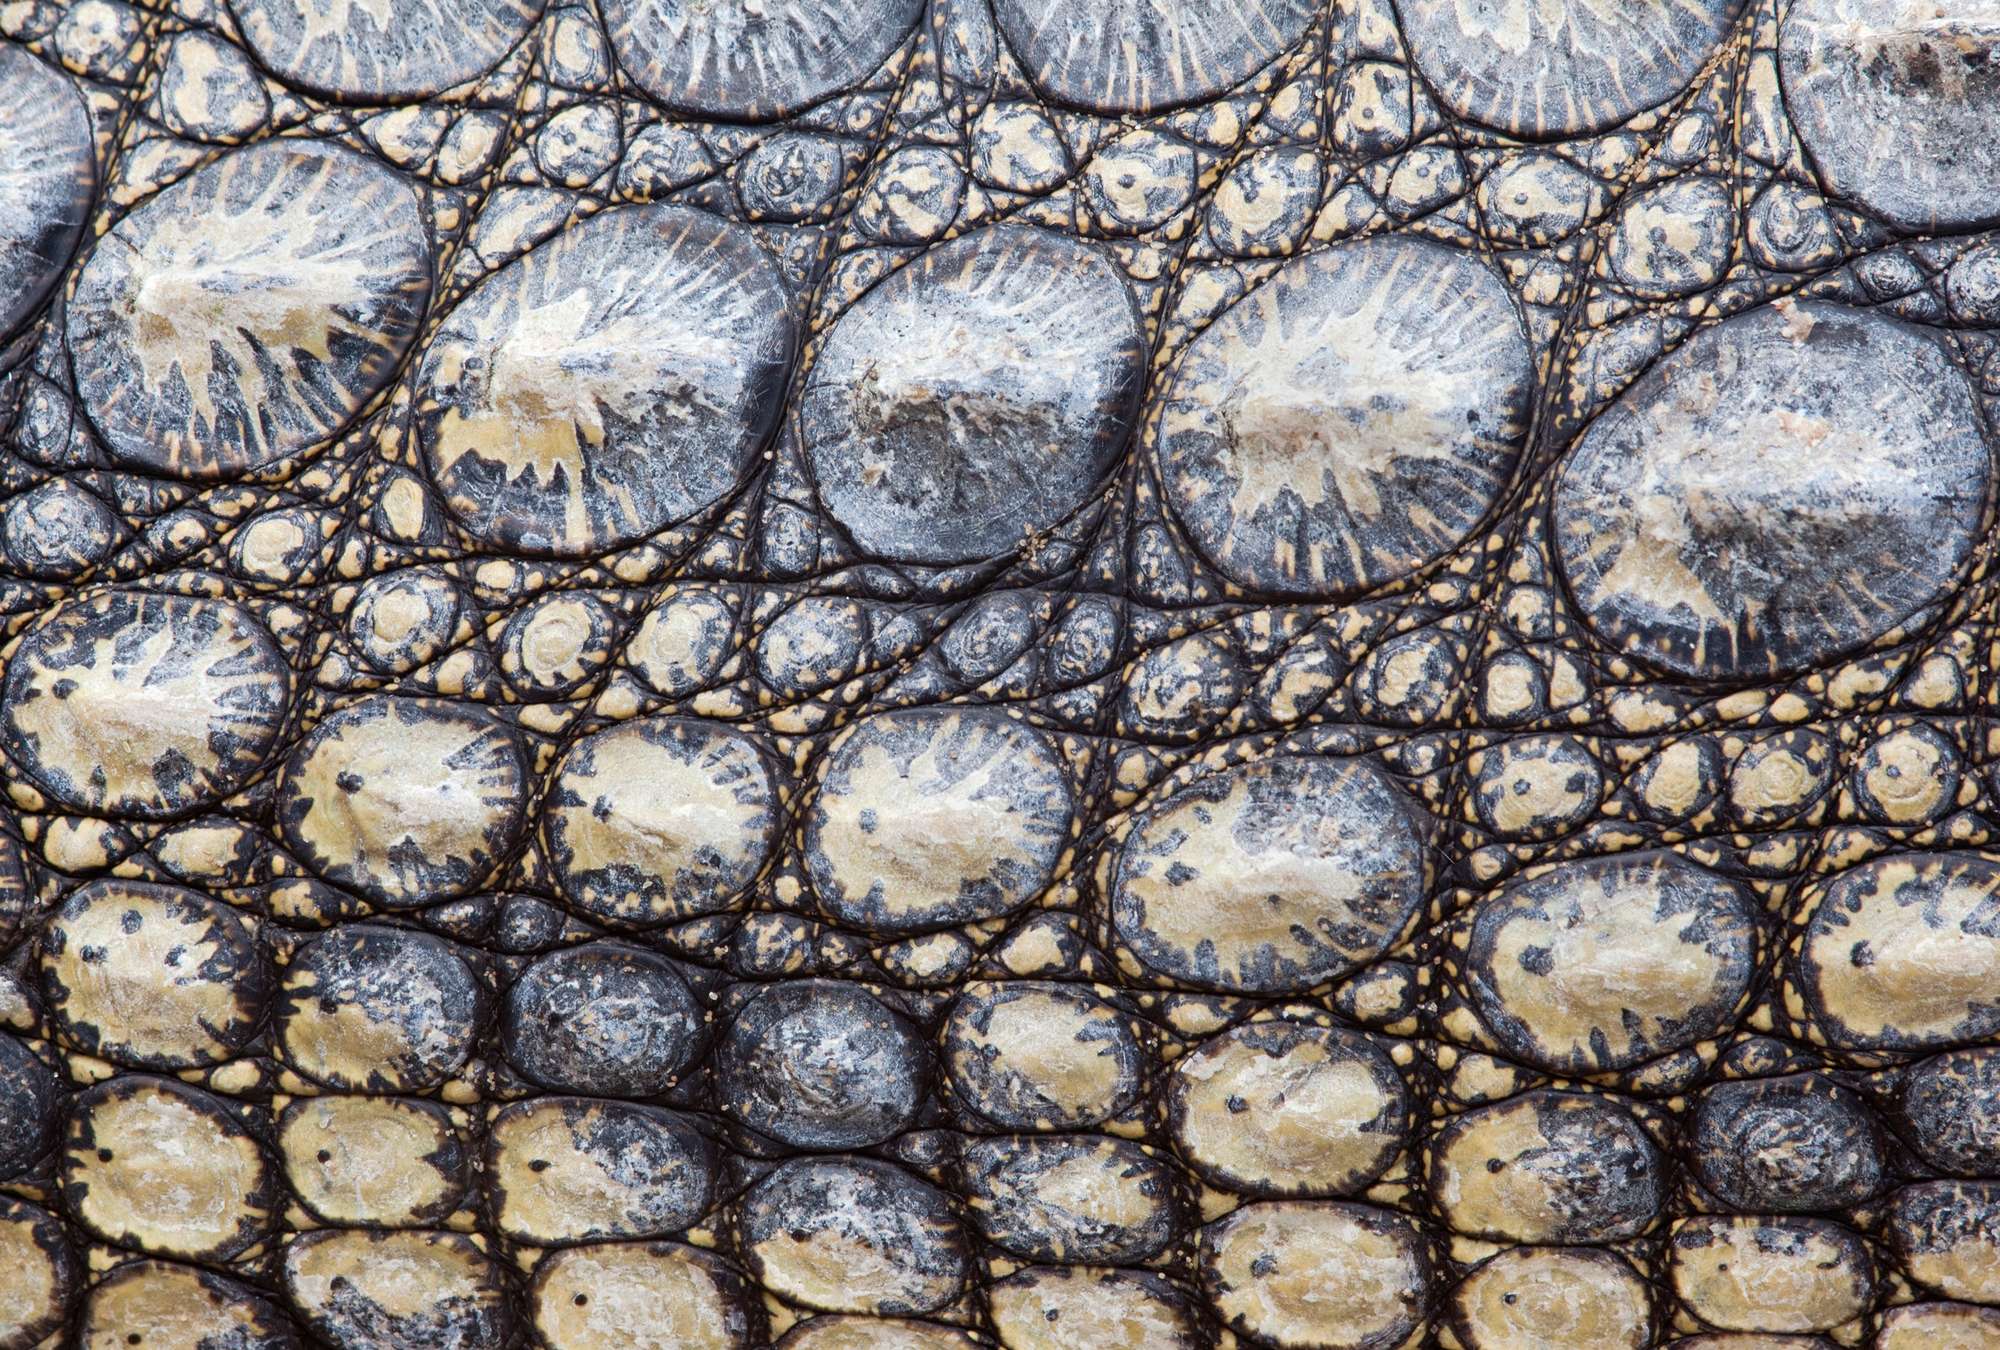             Krokodilhaut – Reptilien Look mit 3D Effekt
        